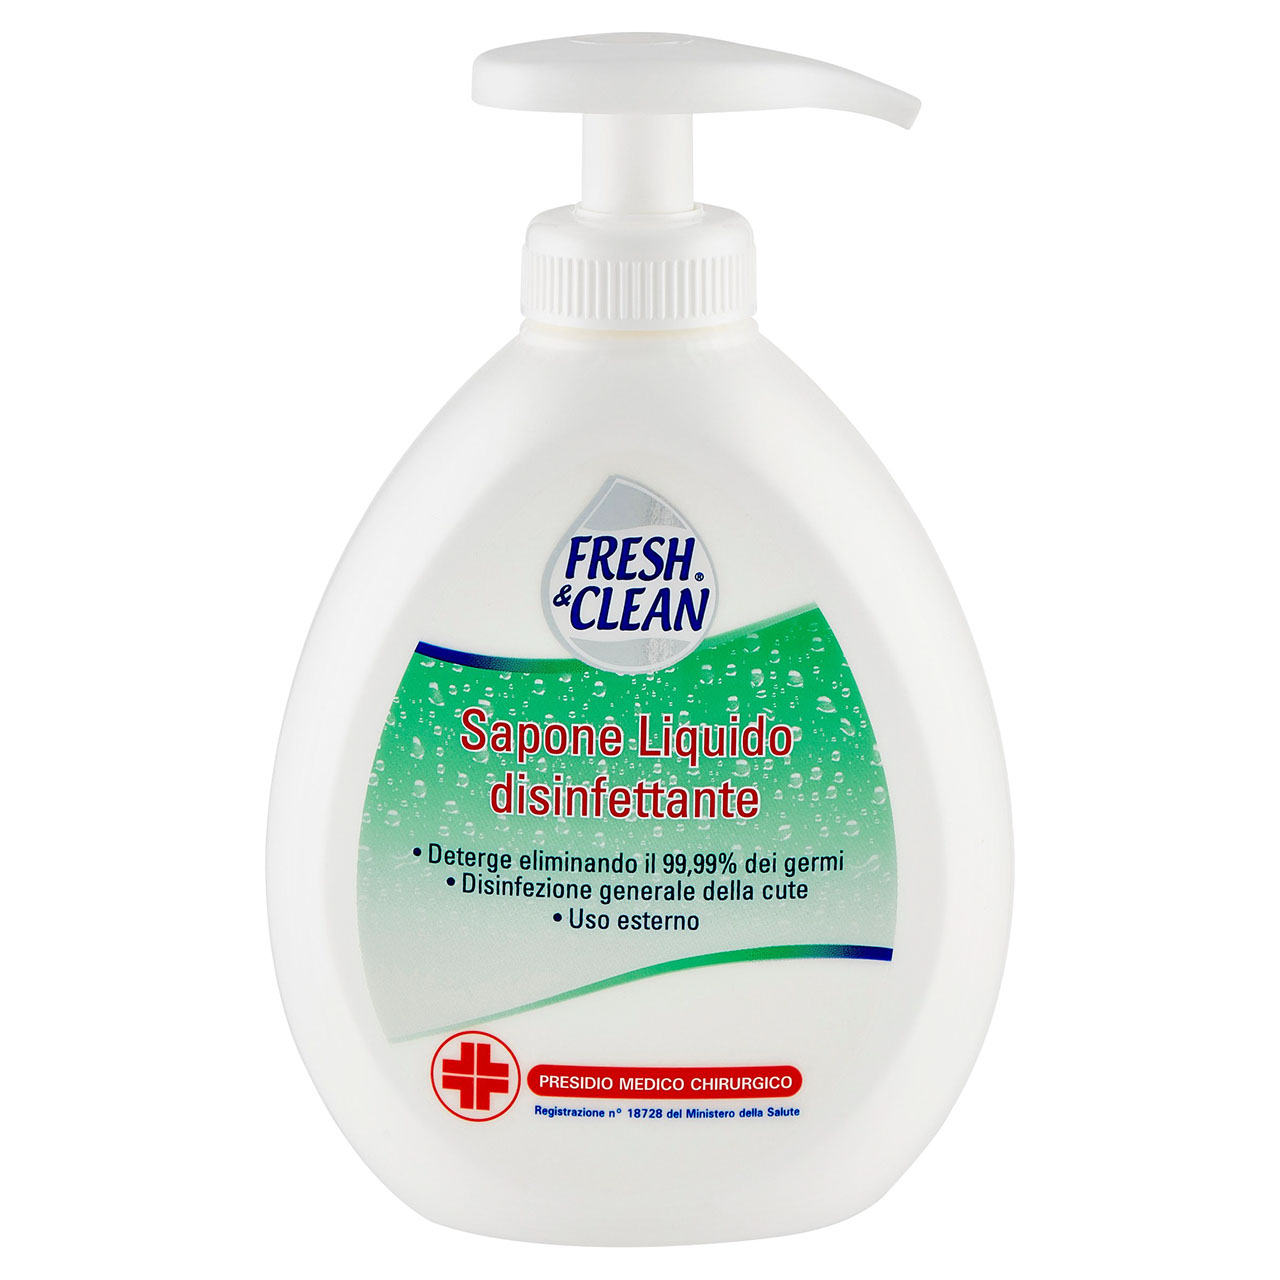 Fresh e Clean Sapone Liquido disinfettante